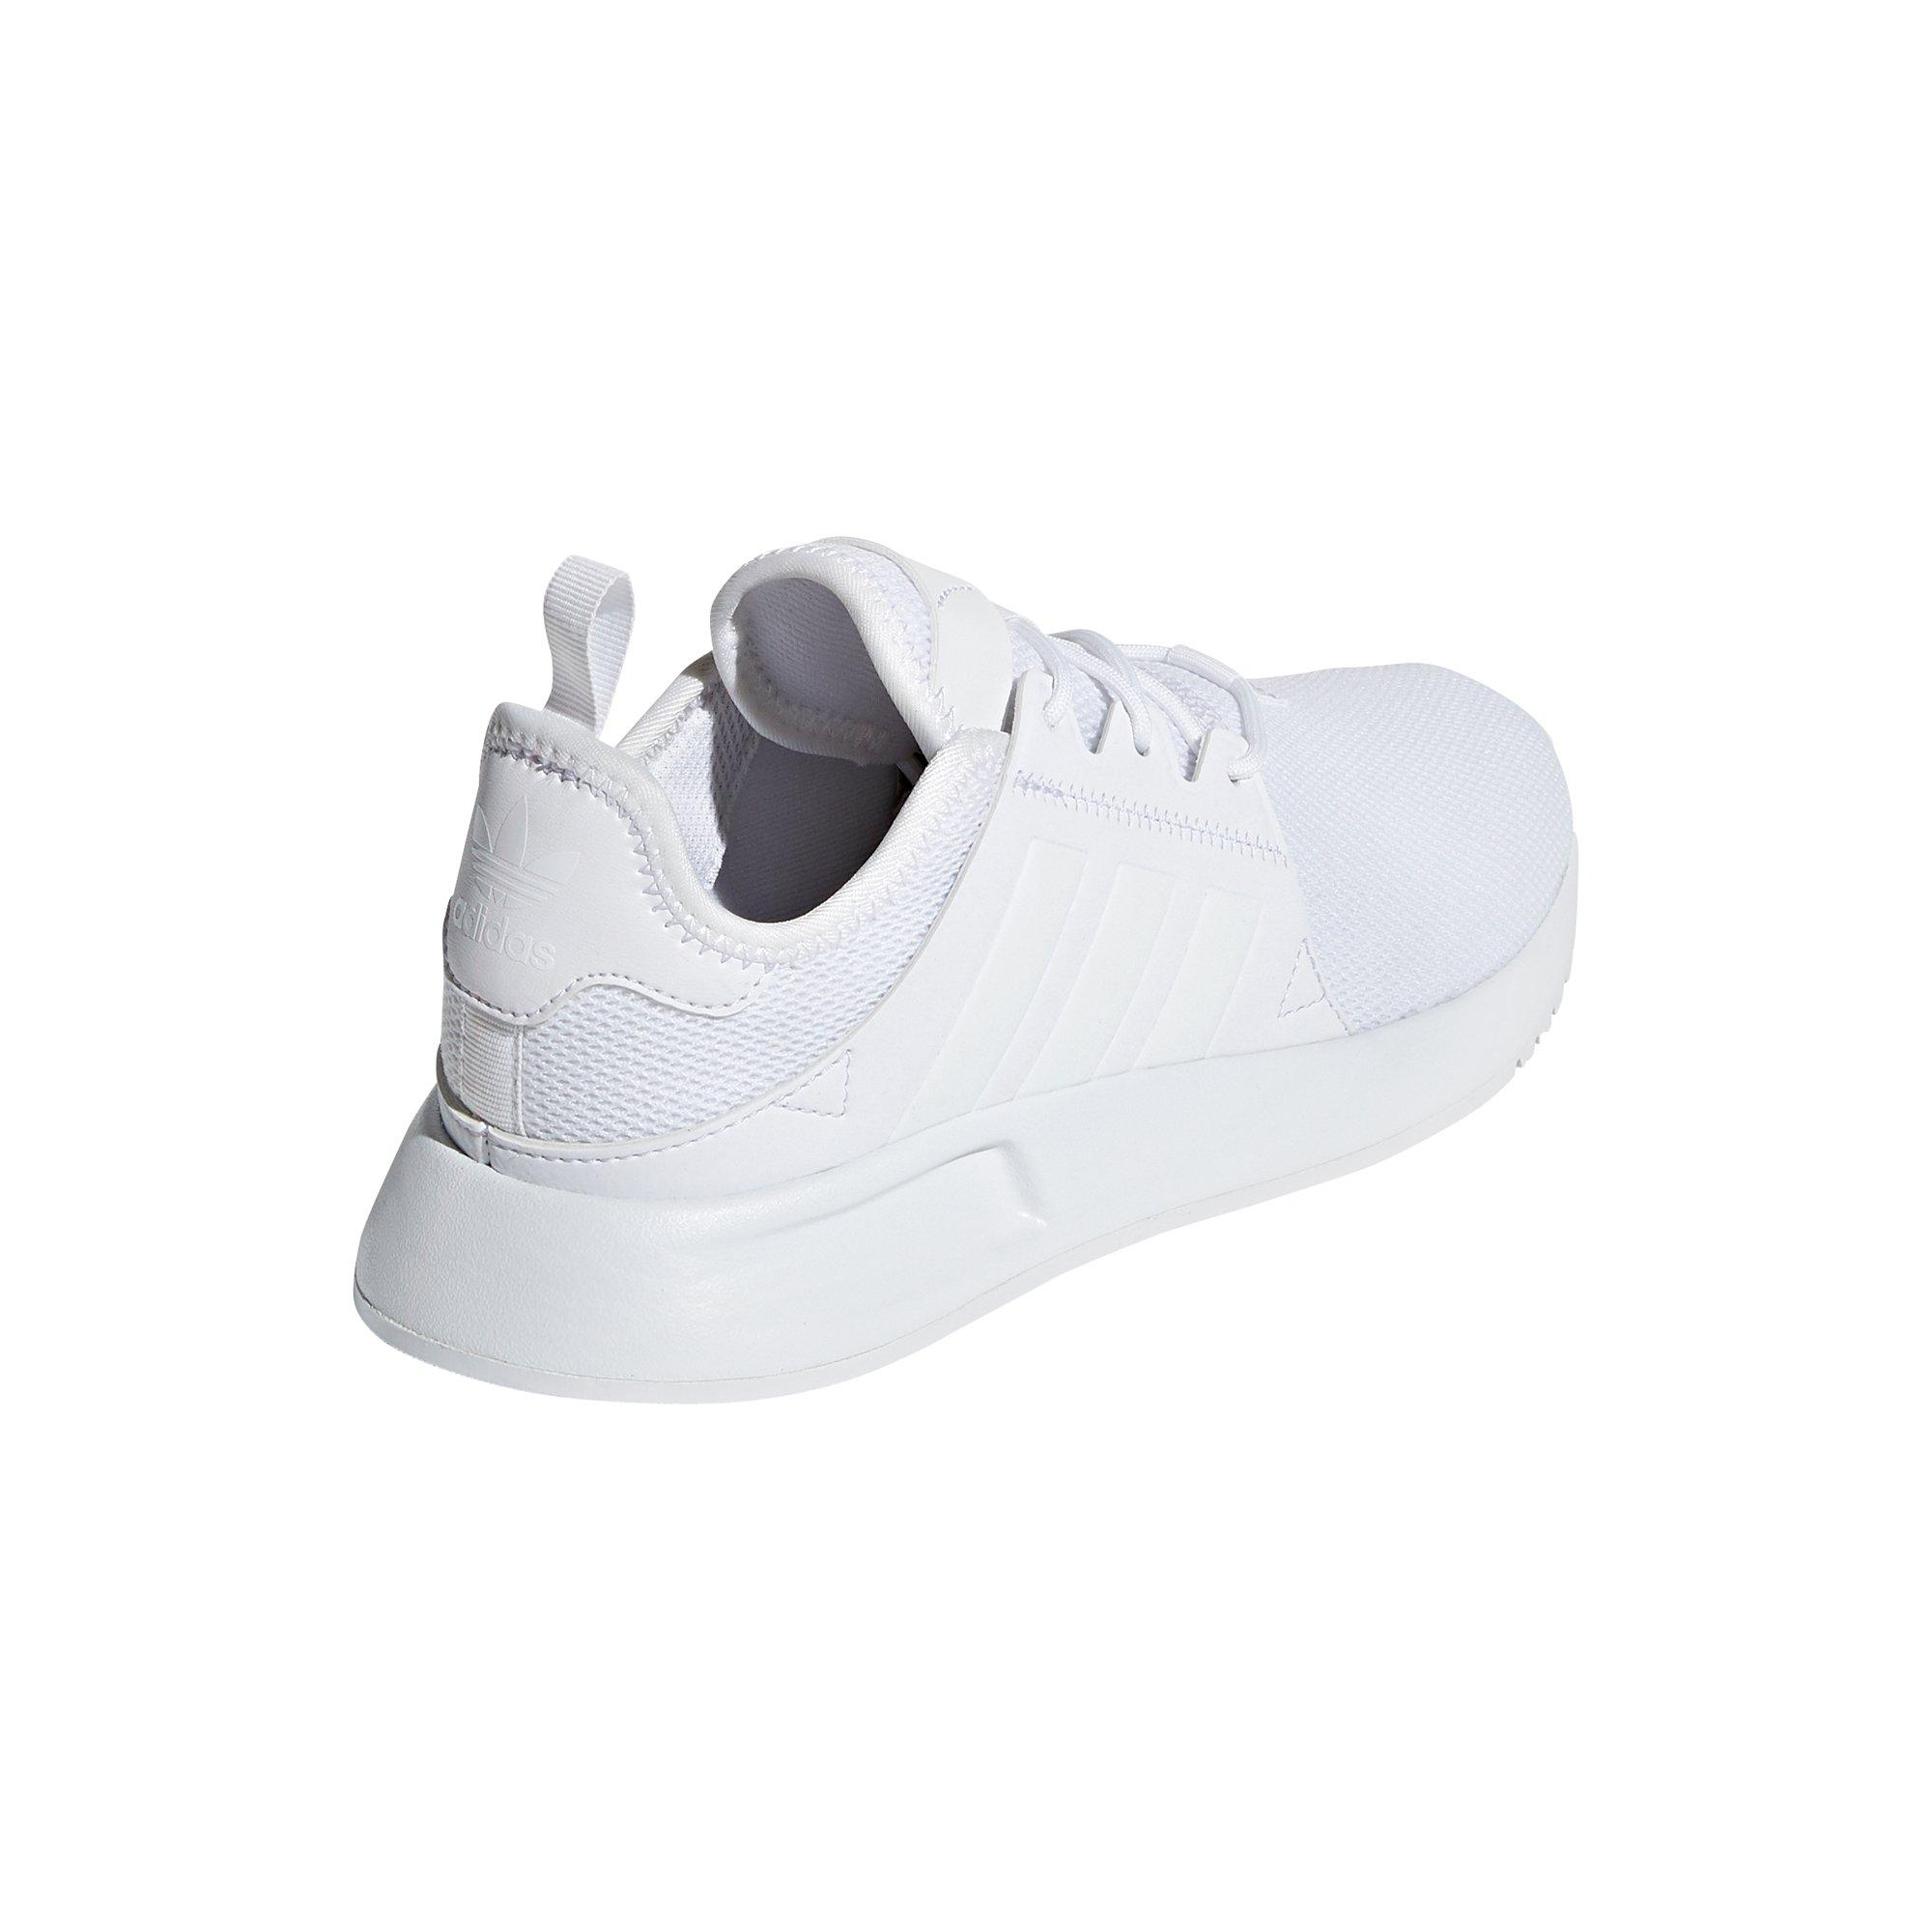 X_PLR "Ftwr White" Grade School Kids' Shoe